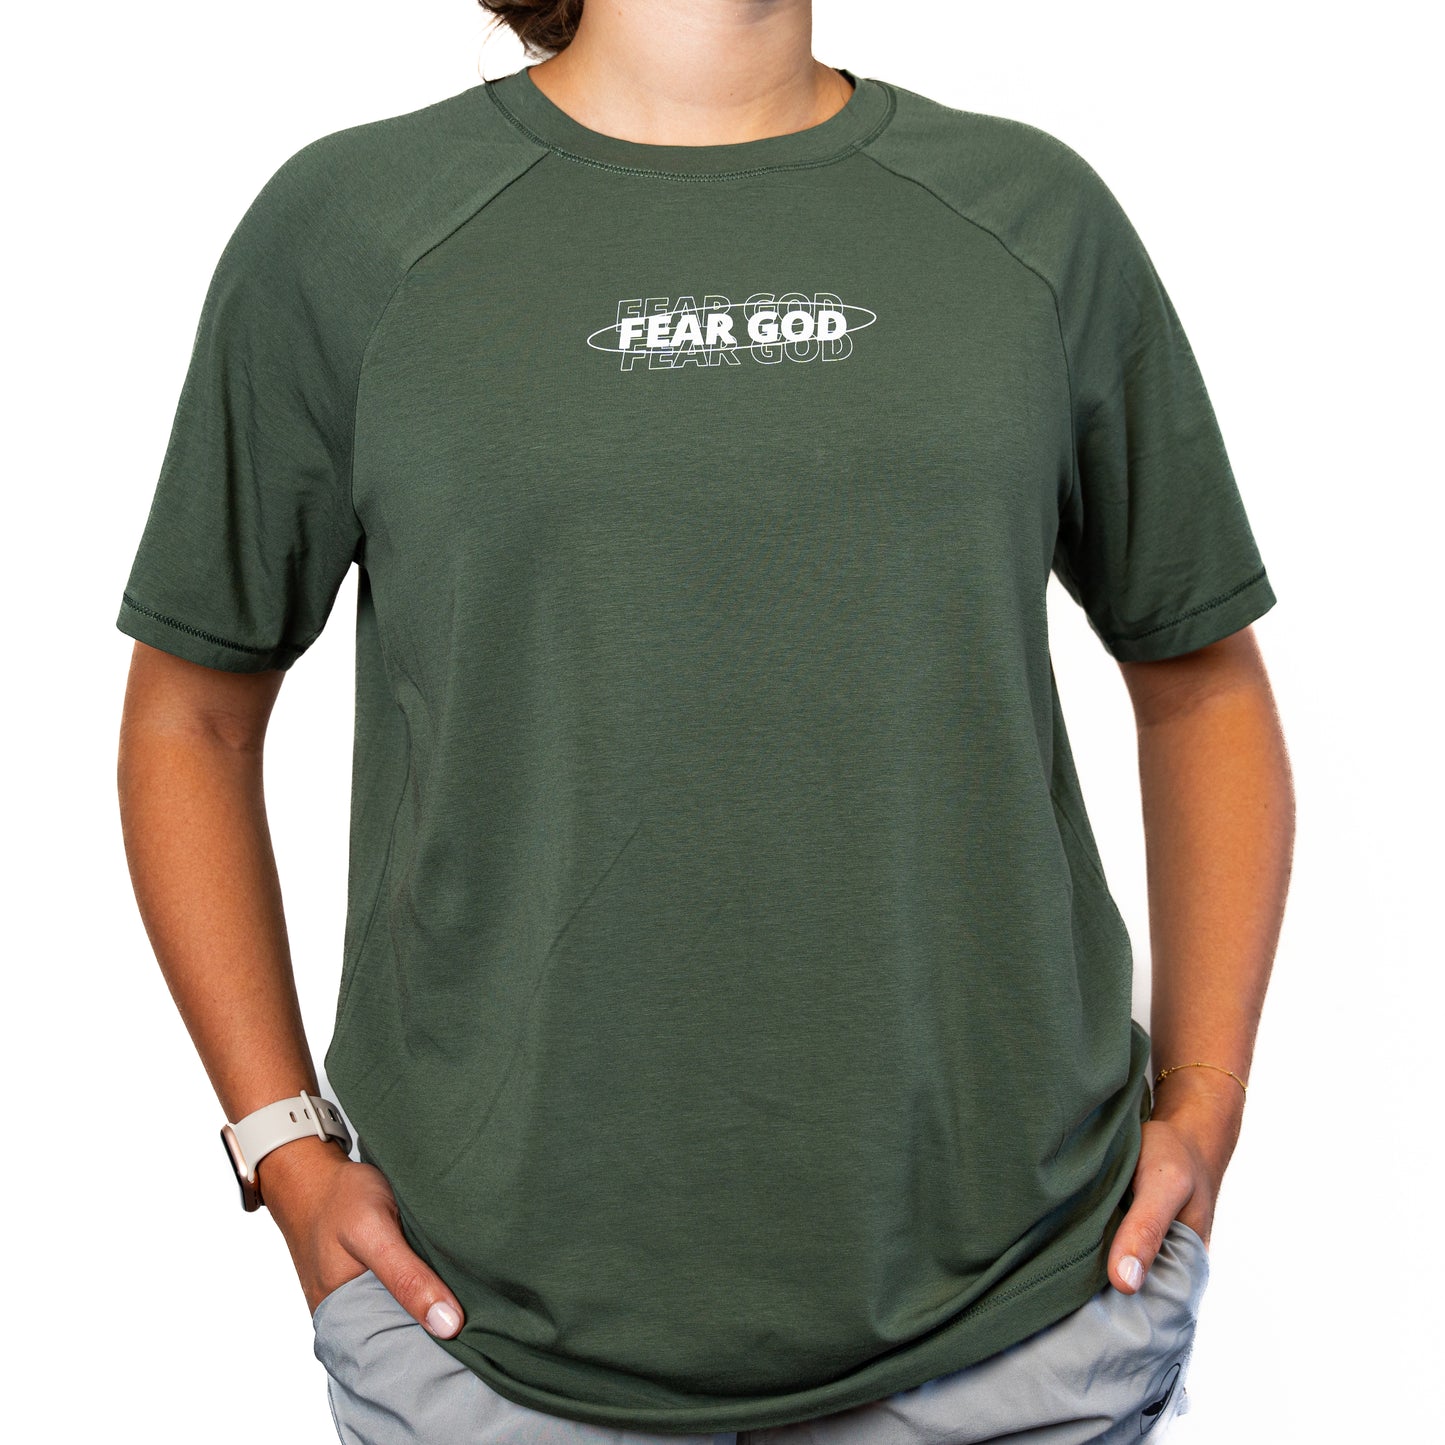 FEAR GOD Army Green Women’s Raglan Tee